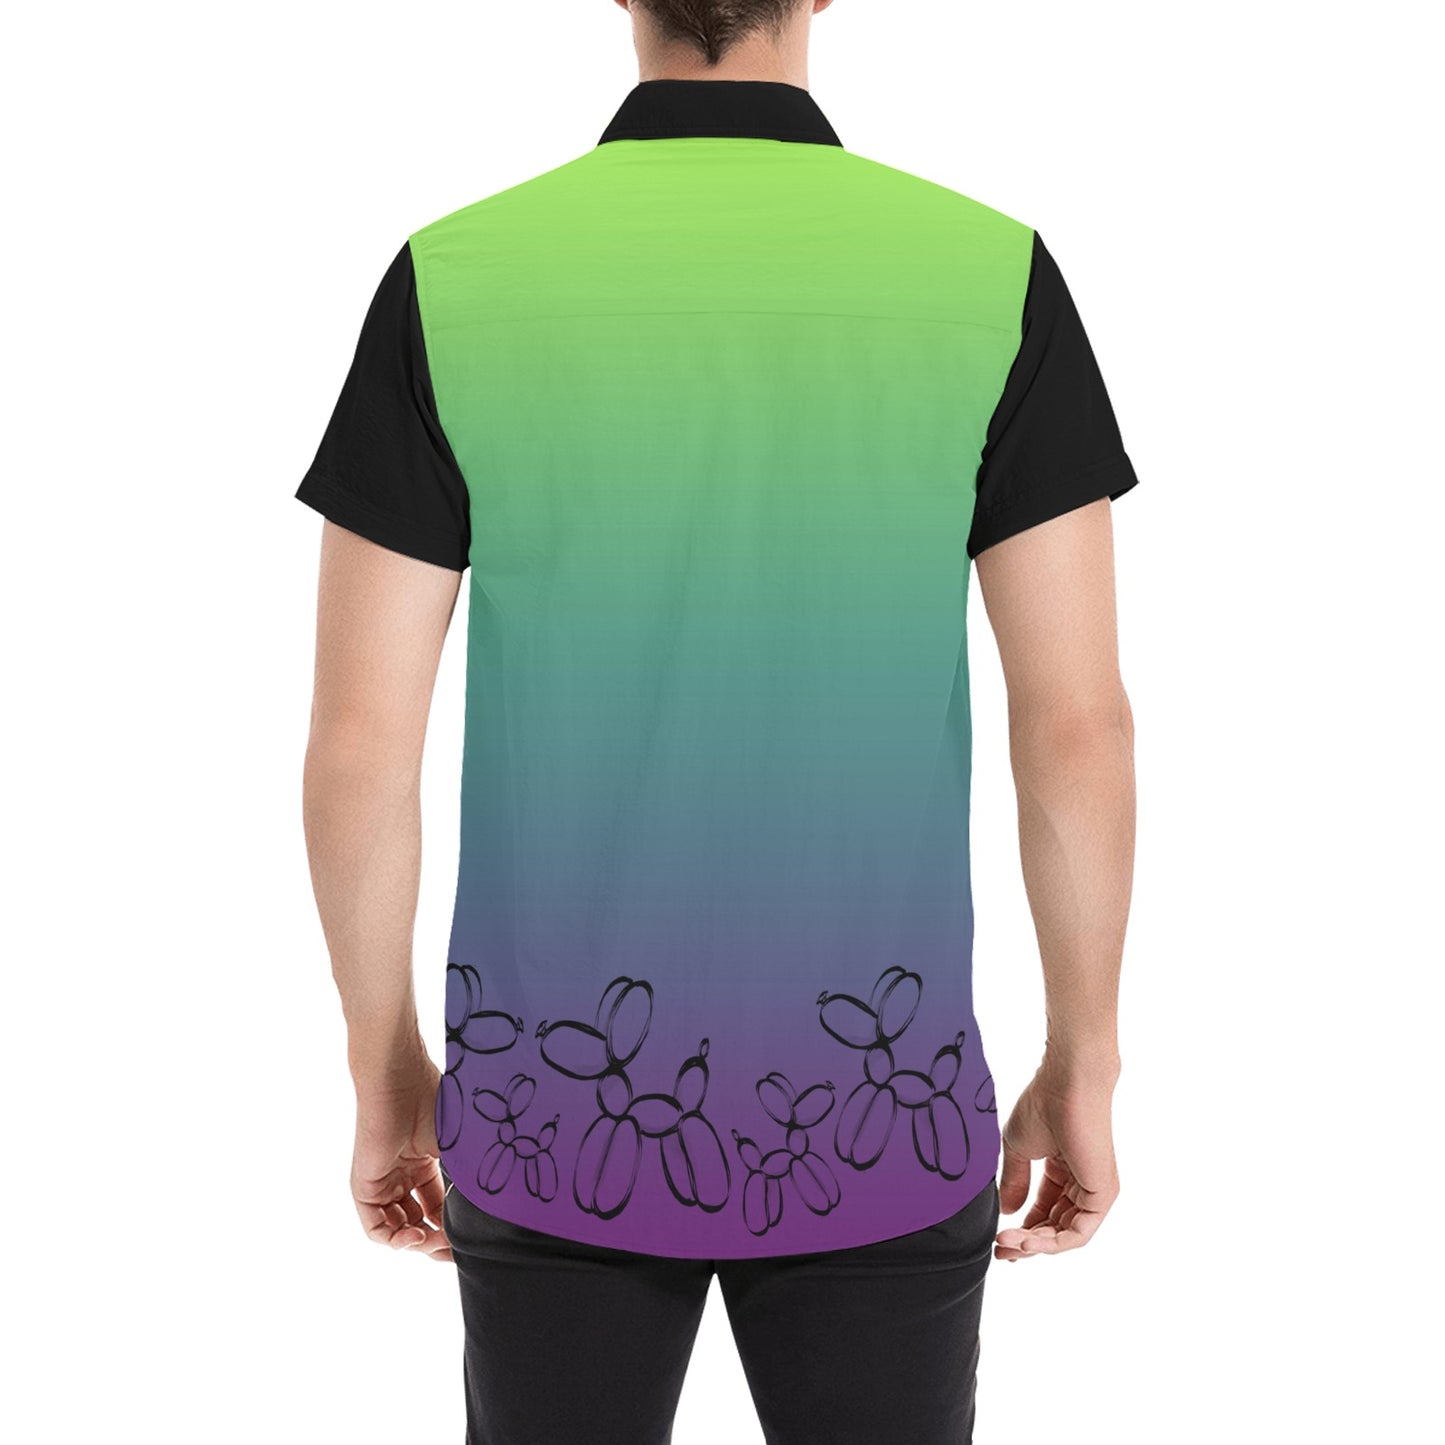 Nuclear Kermit Black Sleeves - Nate Short Sleeve Shirt (Small-5XL)